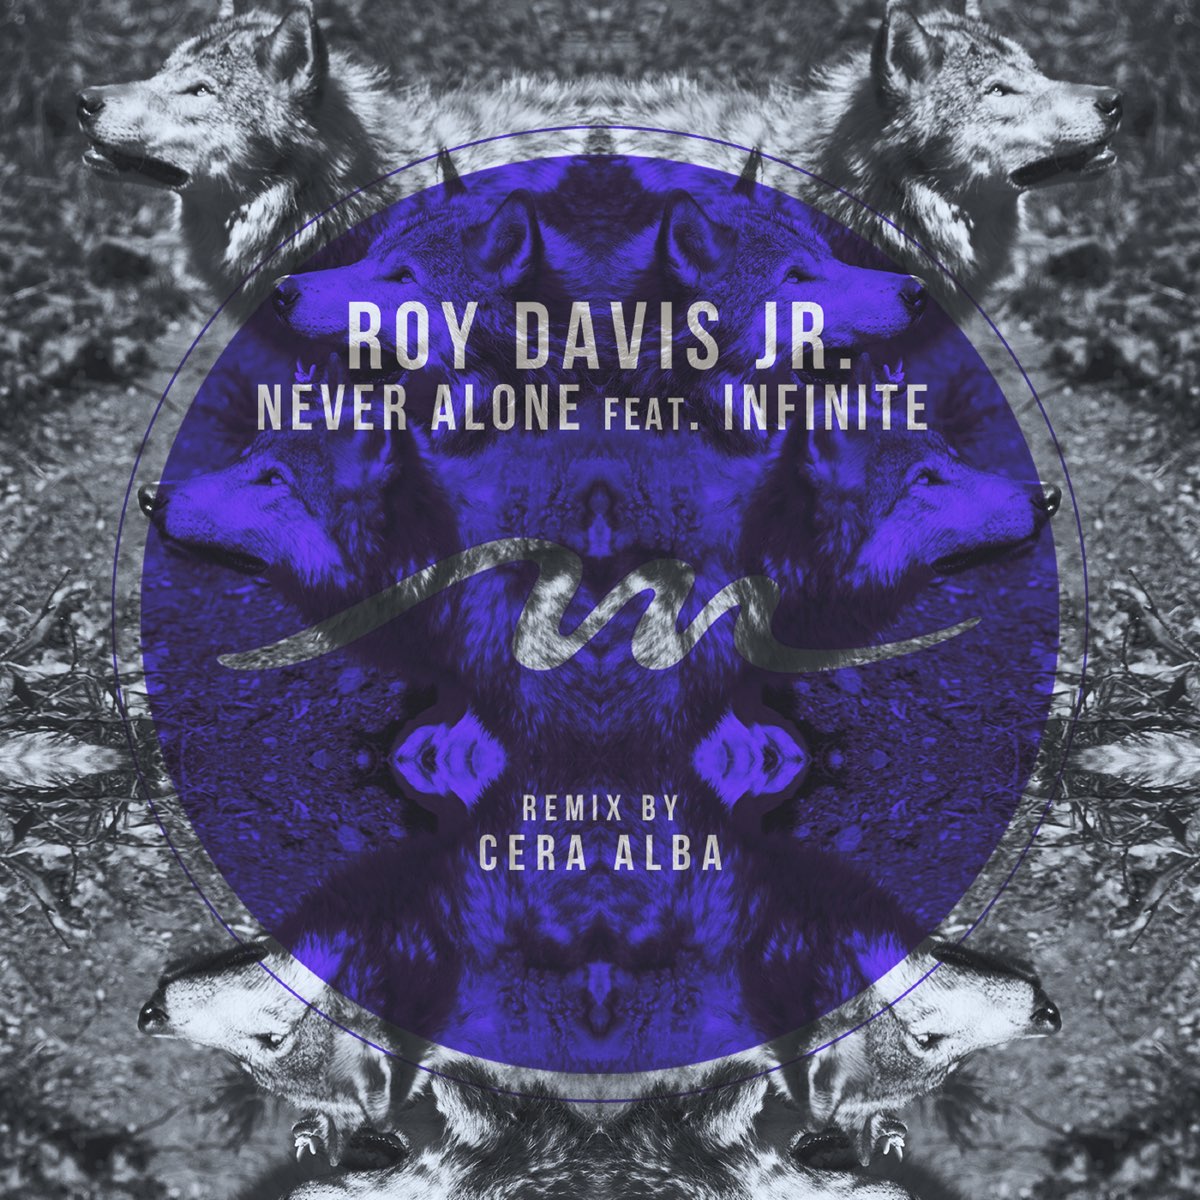 Infinity Alone. Never Alone. Roy Davis Jr. Featuring Peven Everett – Gabriel. Terrem - Alone (Original Mix).